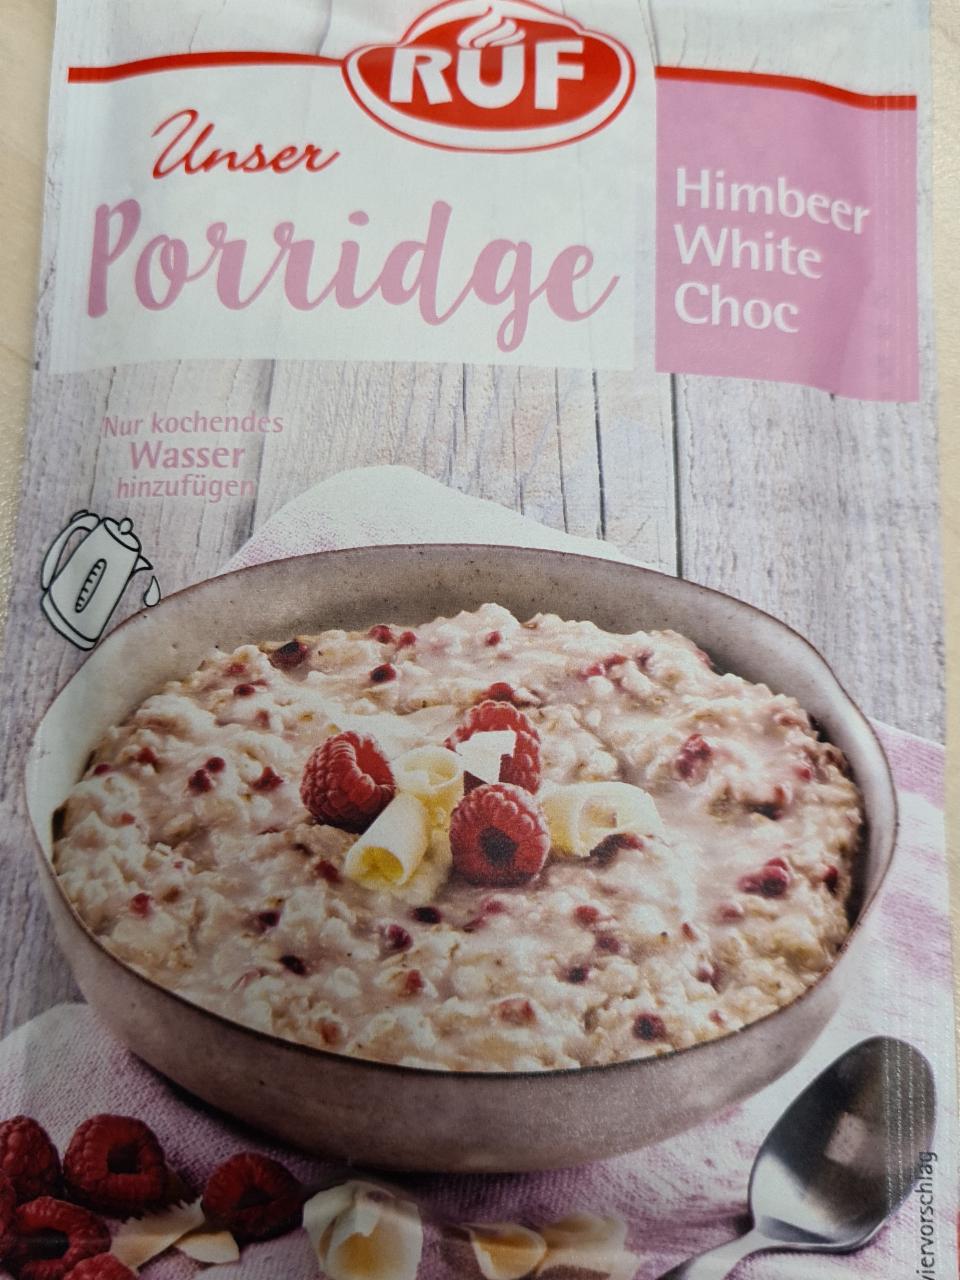 Fotografie - Unser Porridge Himbeer White Choc RUF